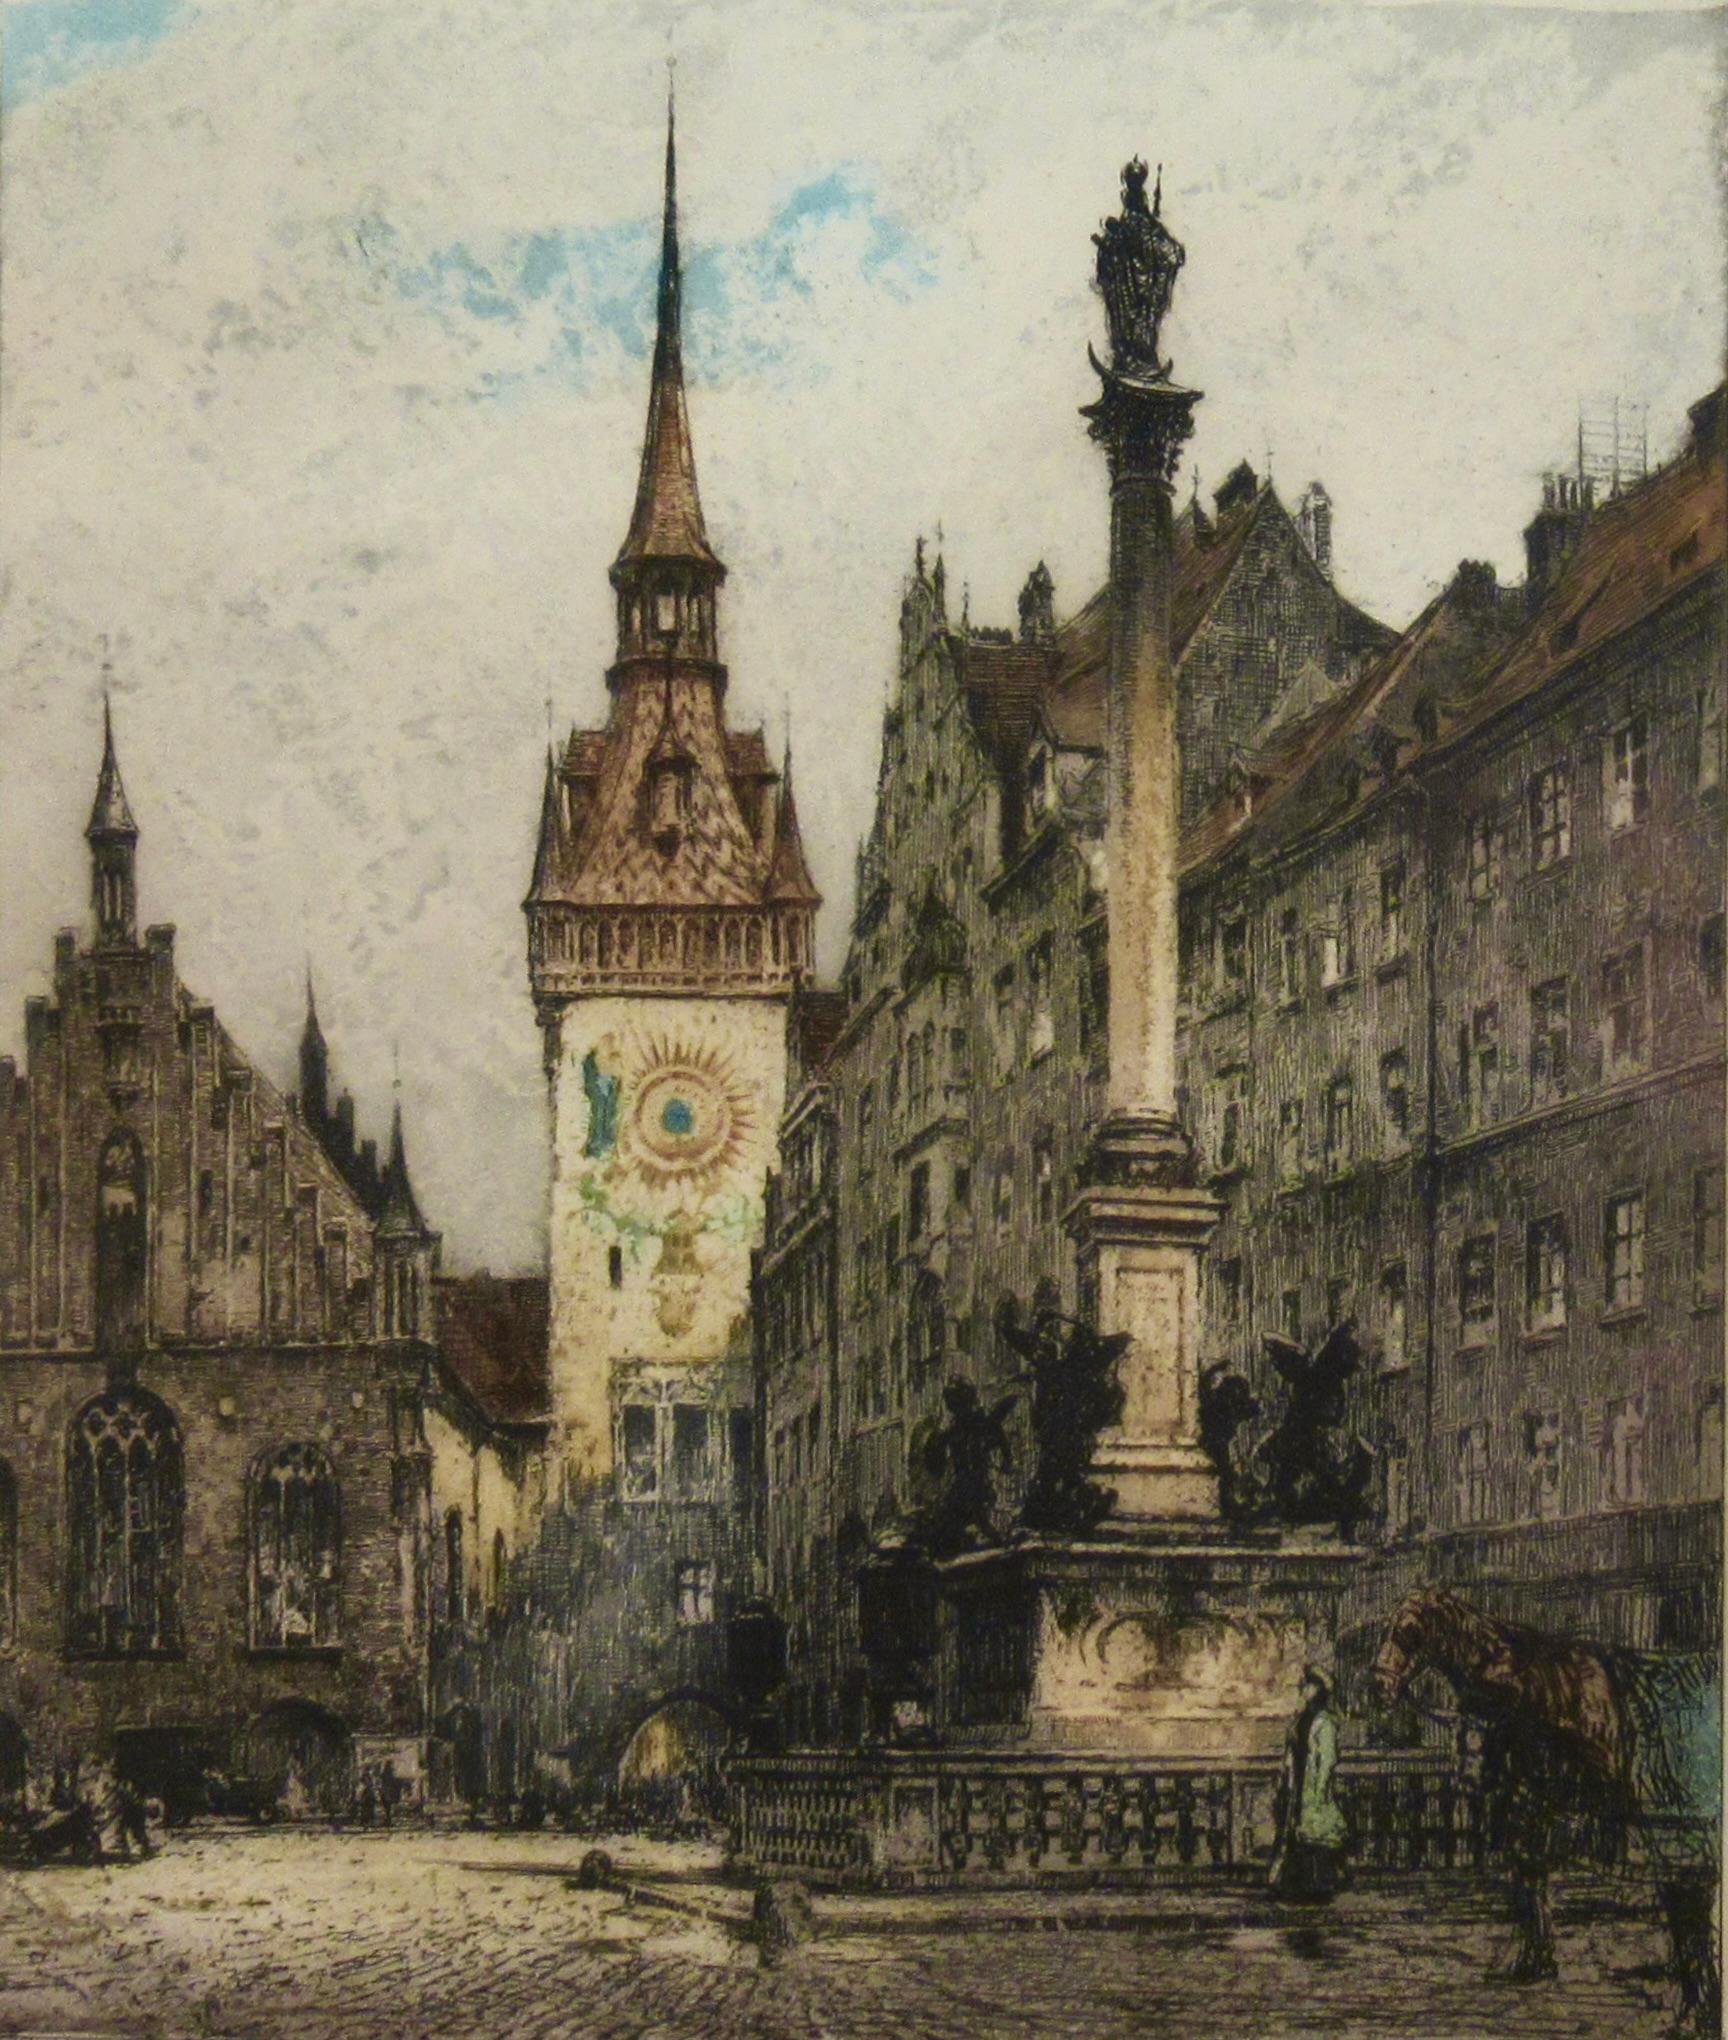 The Old City Hall, Munich, Germany - Realist Print by Luigi Kasimir